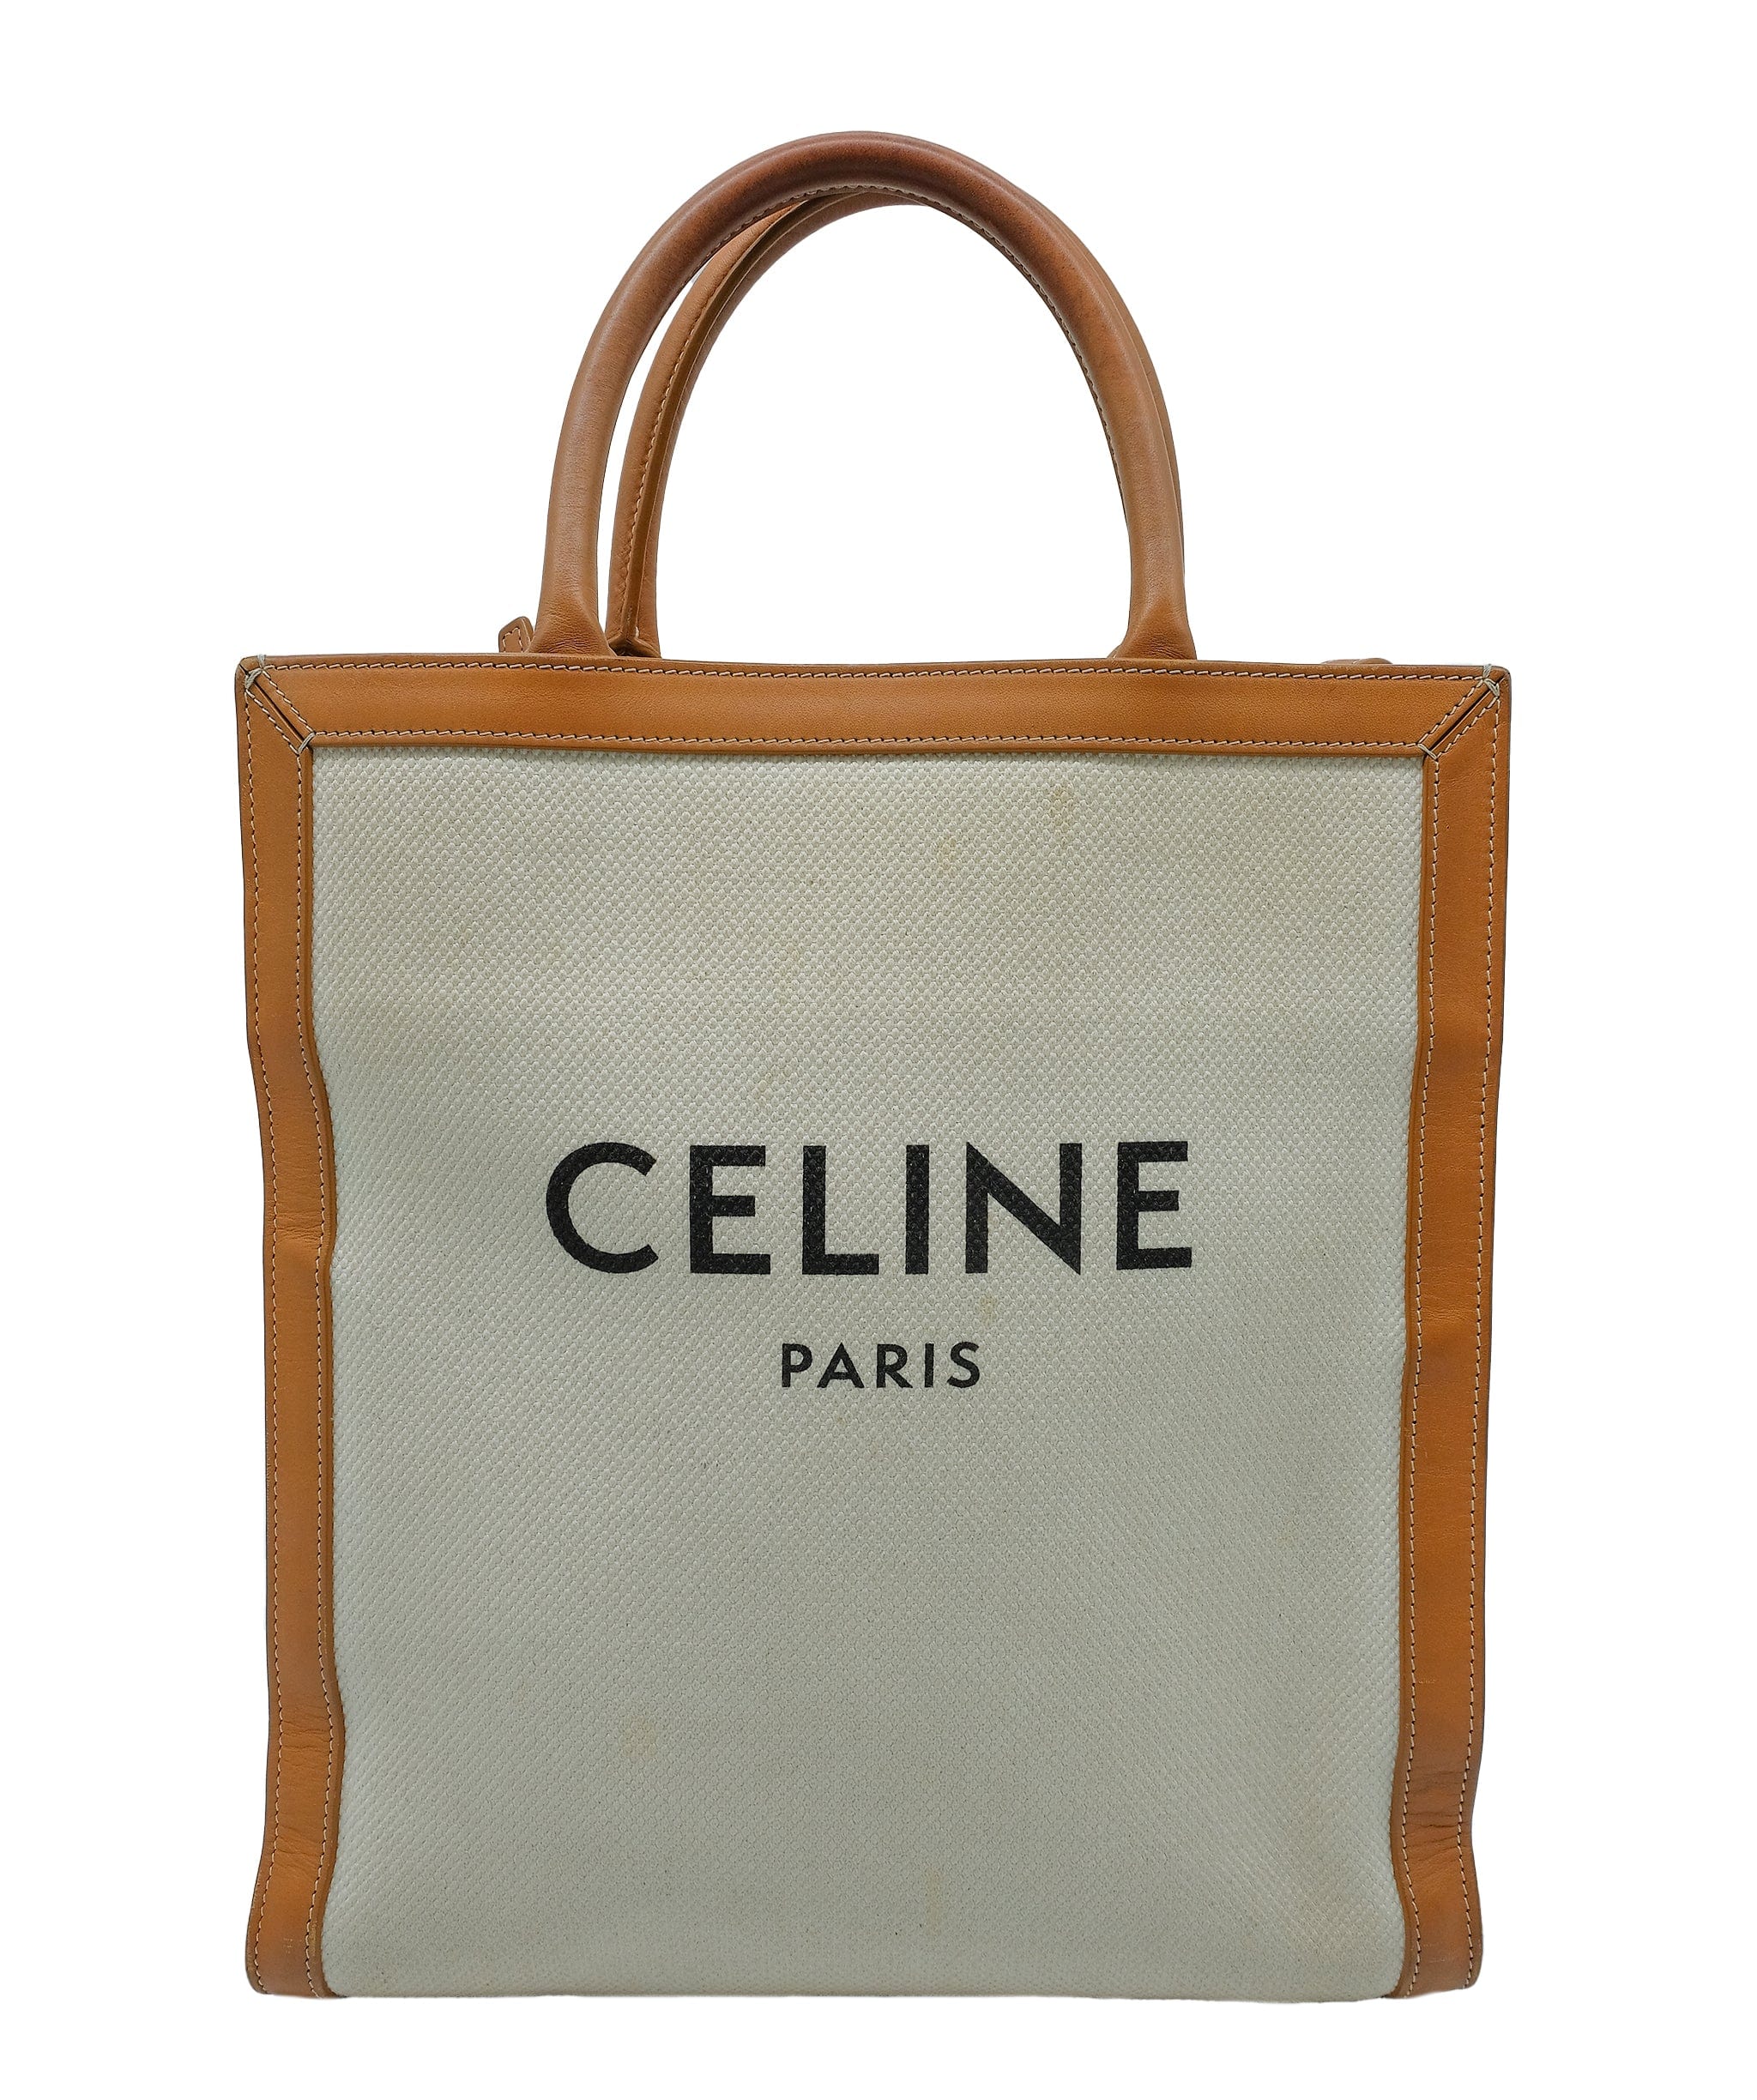 Celine Celine Tote Bag Canvas / LeatherRJC3148